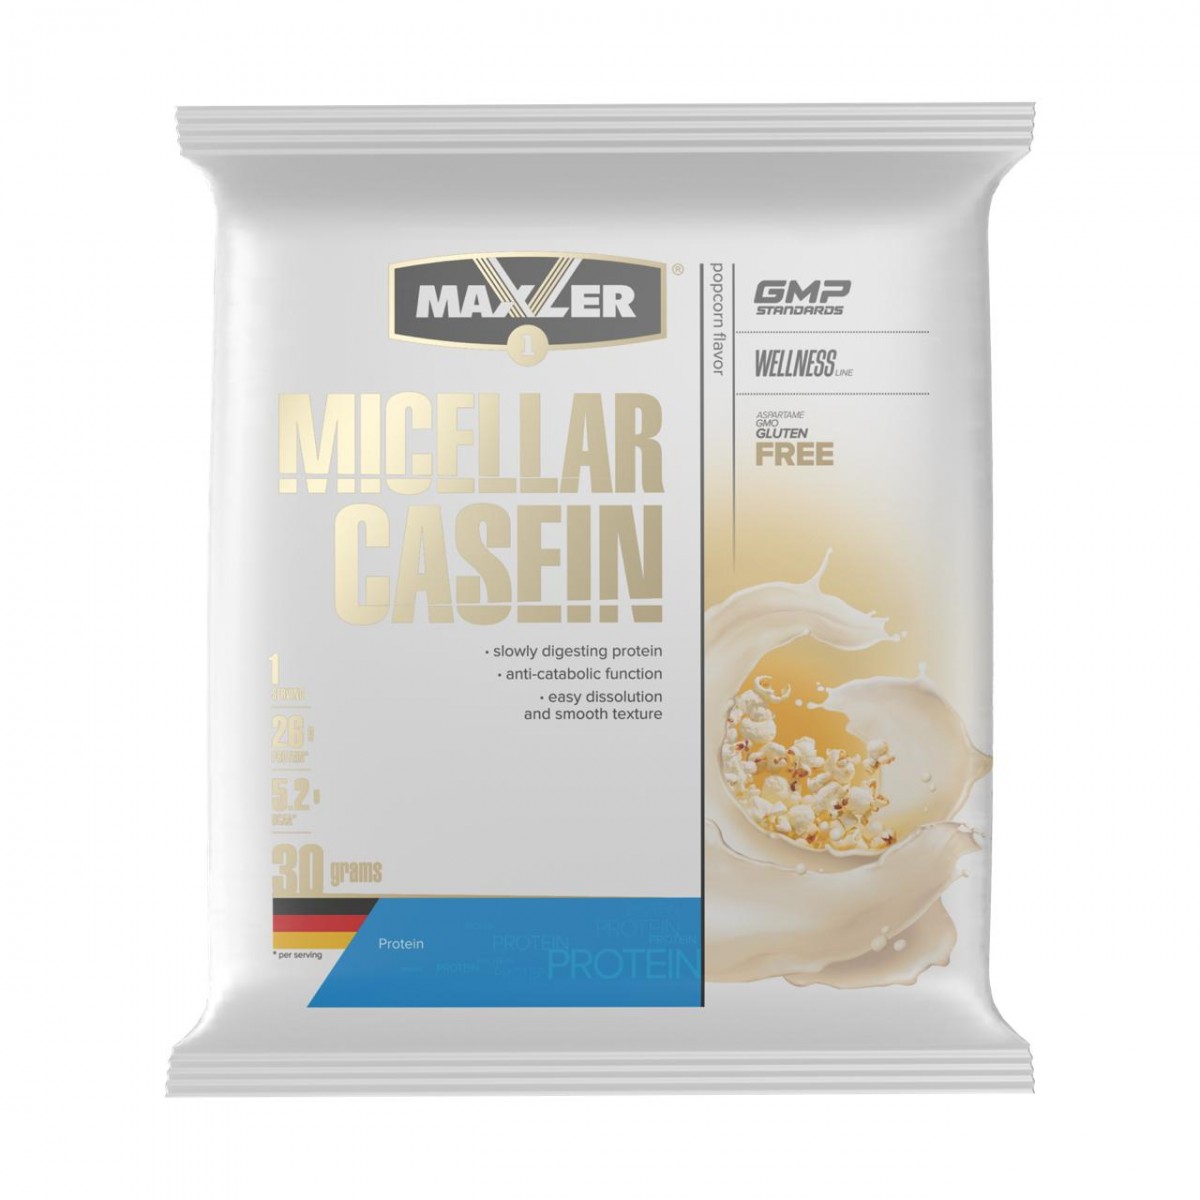 Maxler Micellar Casein, 30 г Протеин казеиновый